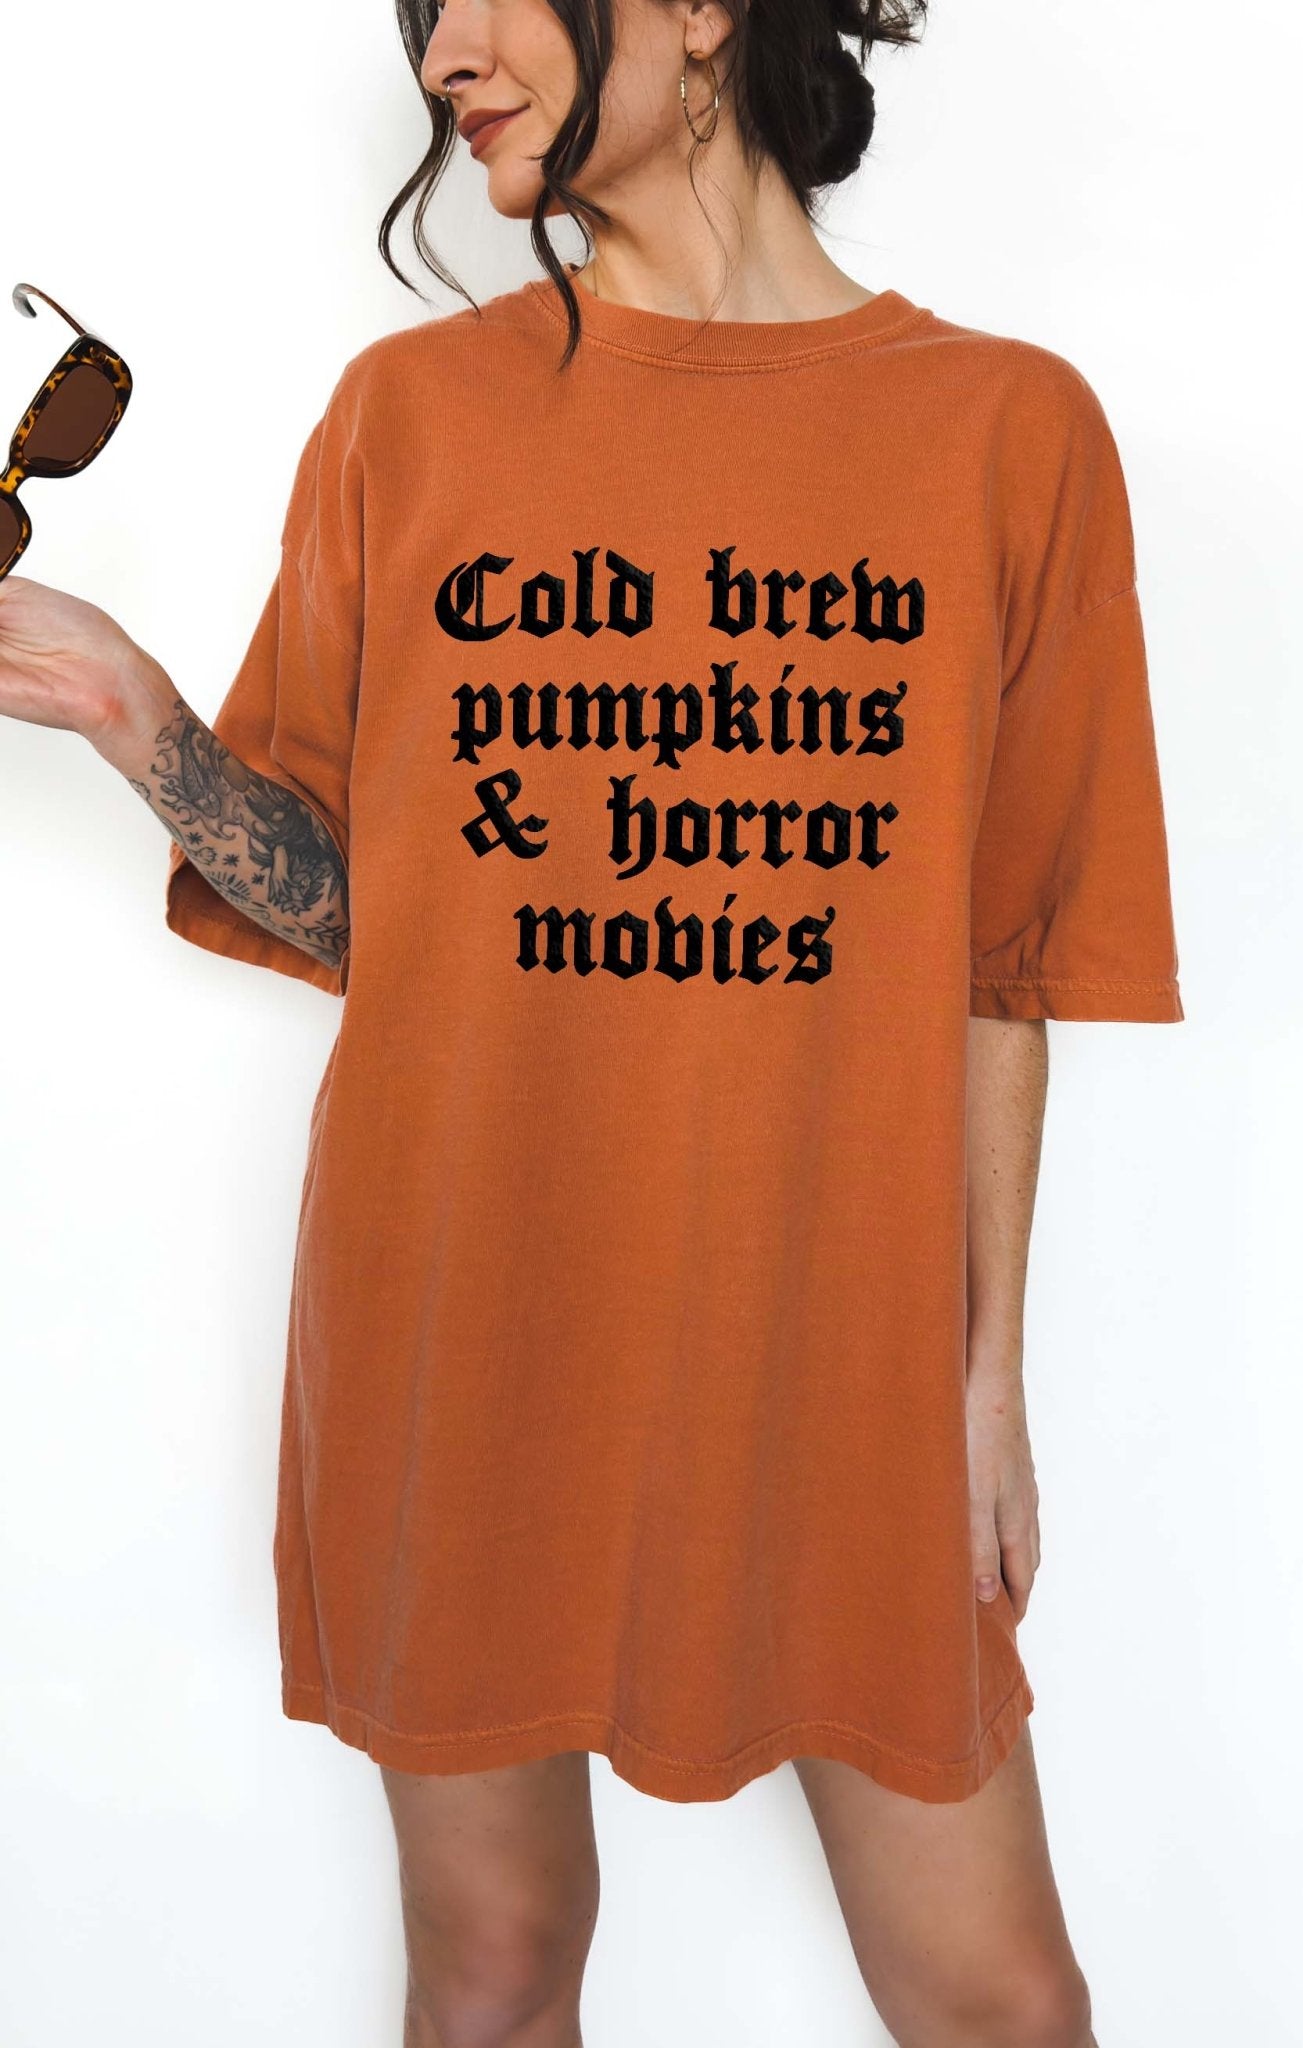 Cold Brew Pumpkins & Horror Movies Fall Tee - UntamedEgo LLC.